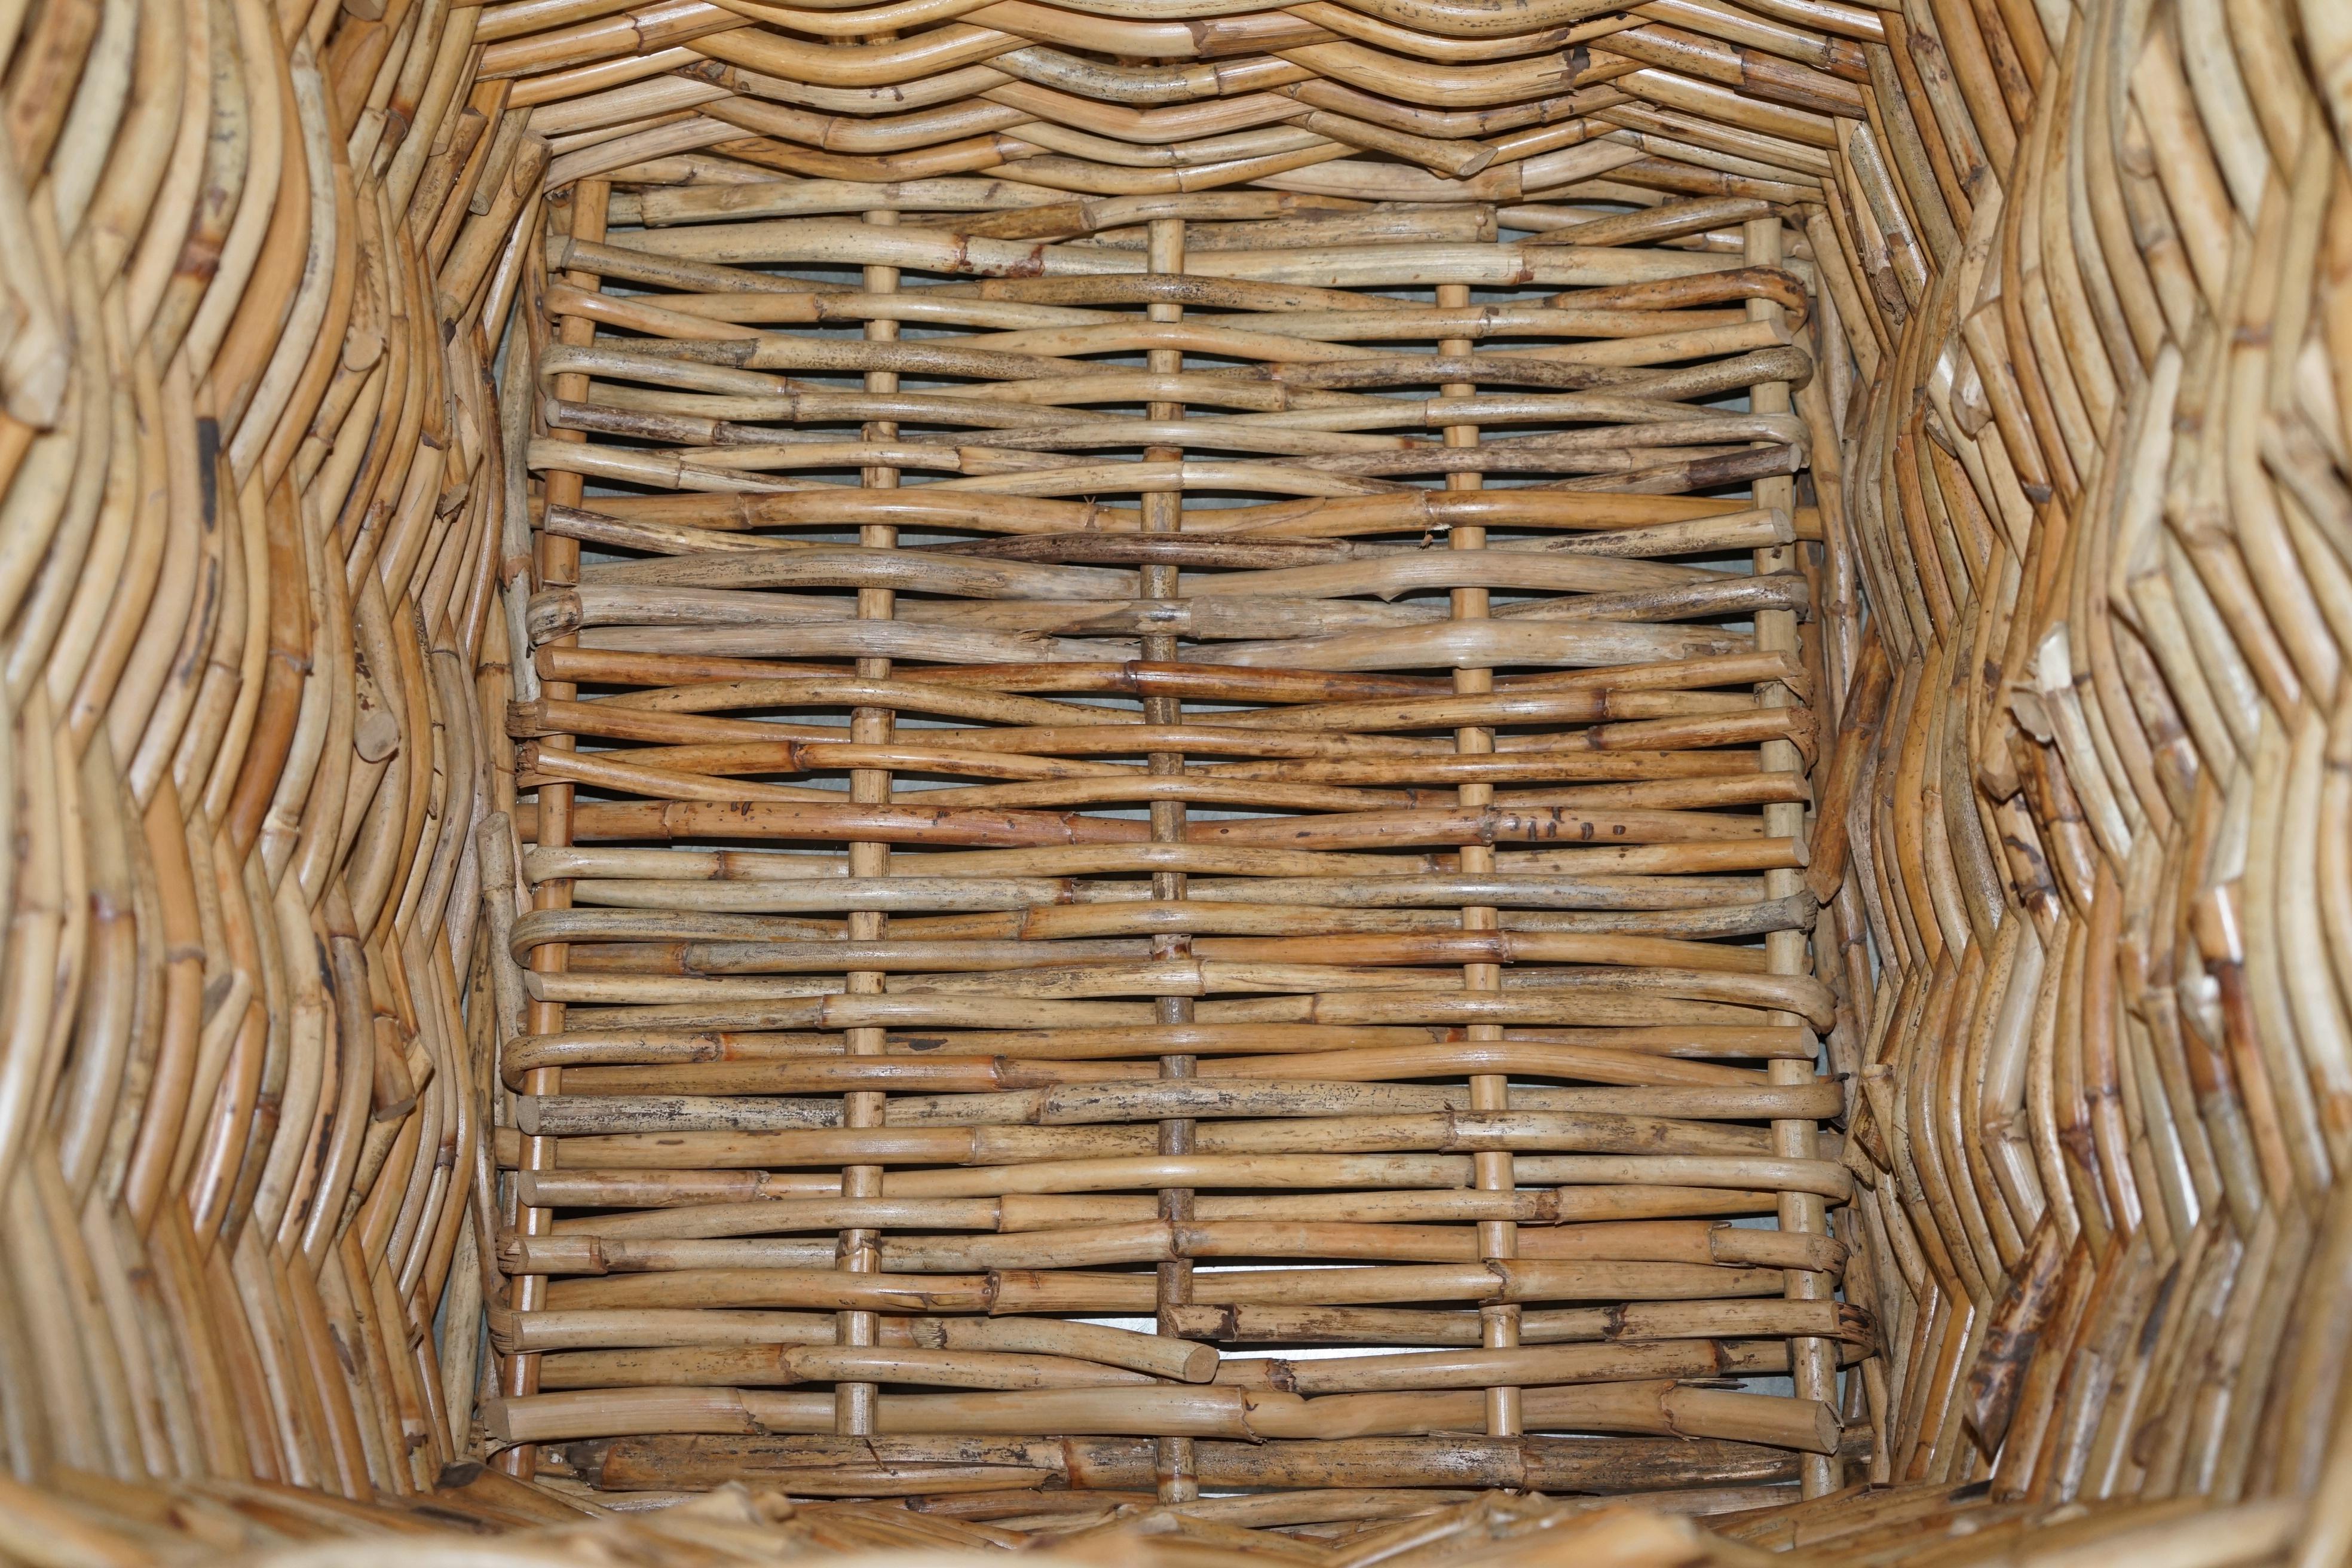 English Stunning Huge Vintage Wicker Rattan Log or Linen Laundry Basket for Fabric Rolls